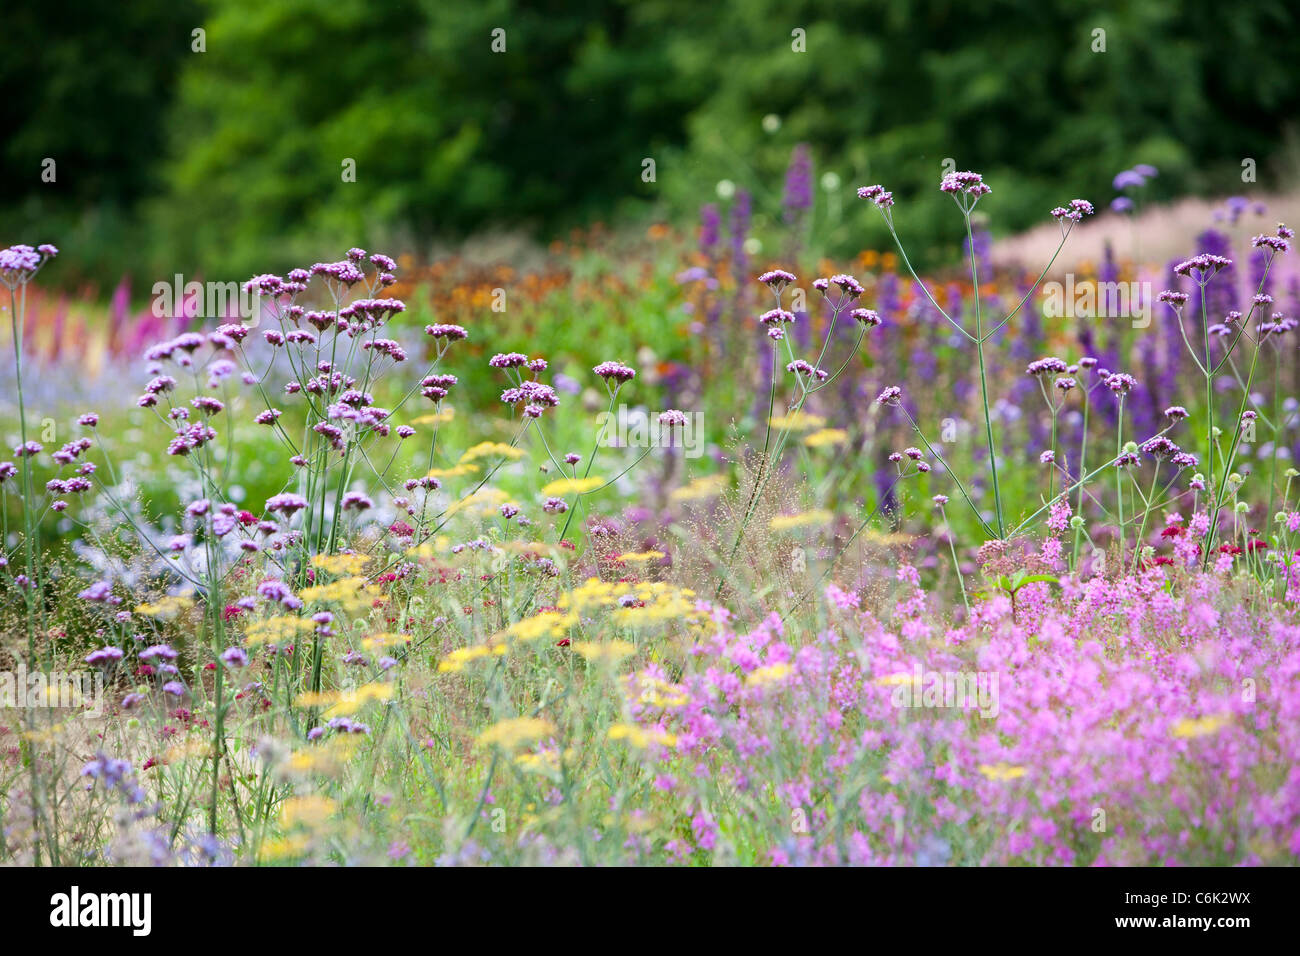 The Millenium Garden at Pensthorpe nature reserve, Norfolk, UK, was designed by Piet Oudolf, Stock Photo